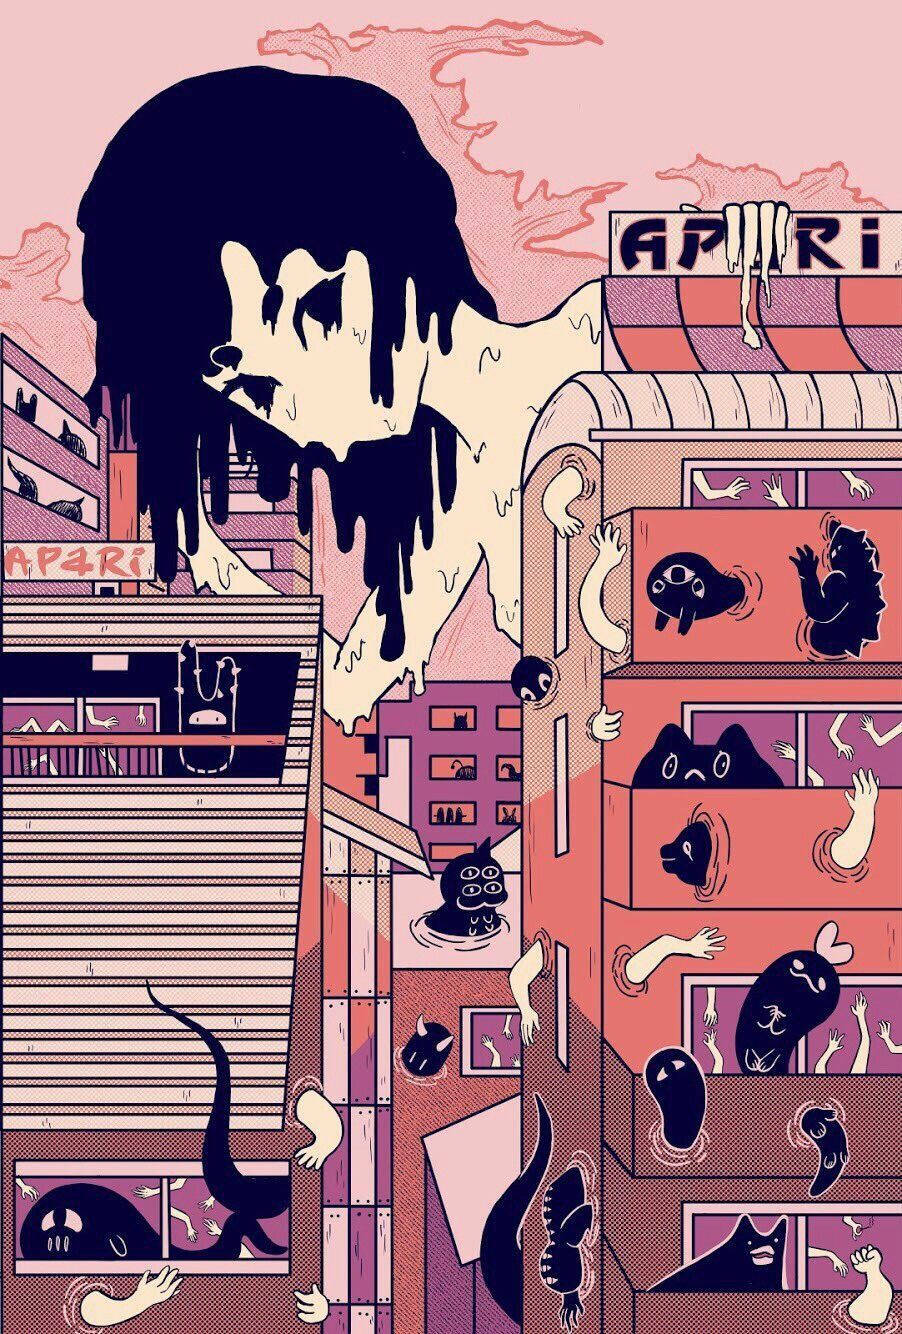 Monsters In The City Retro Anime Aesthetic Wallpaper